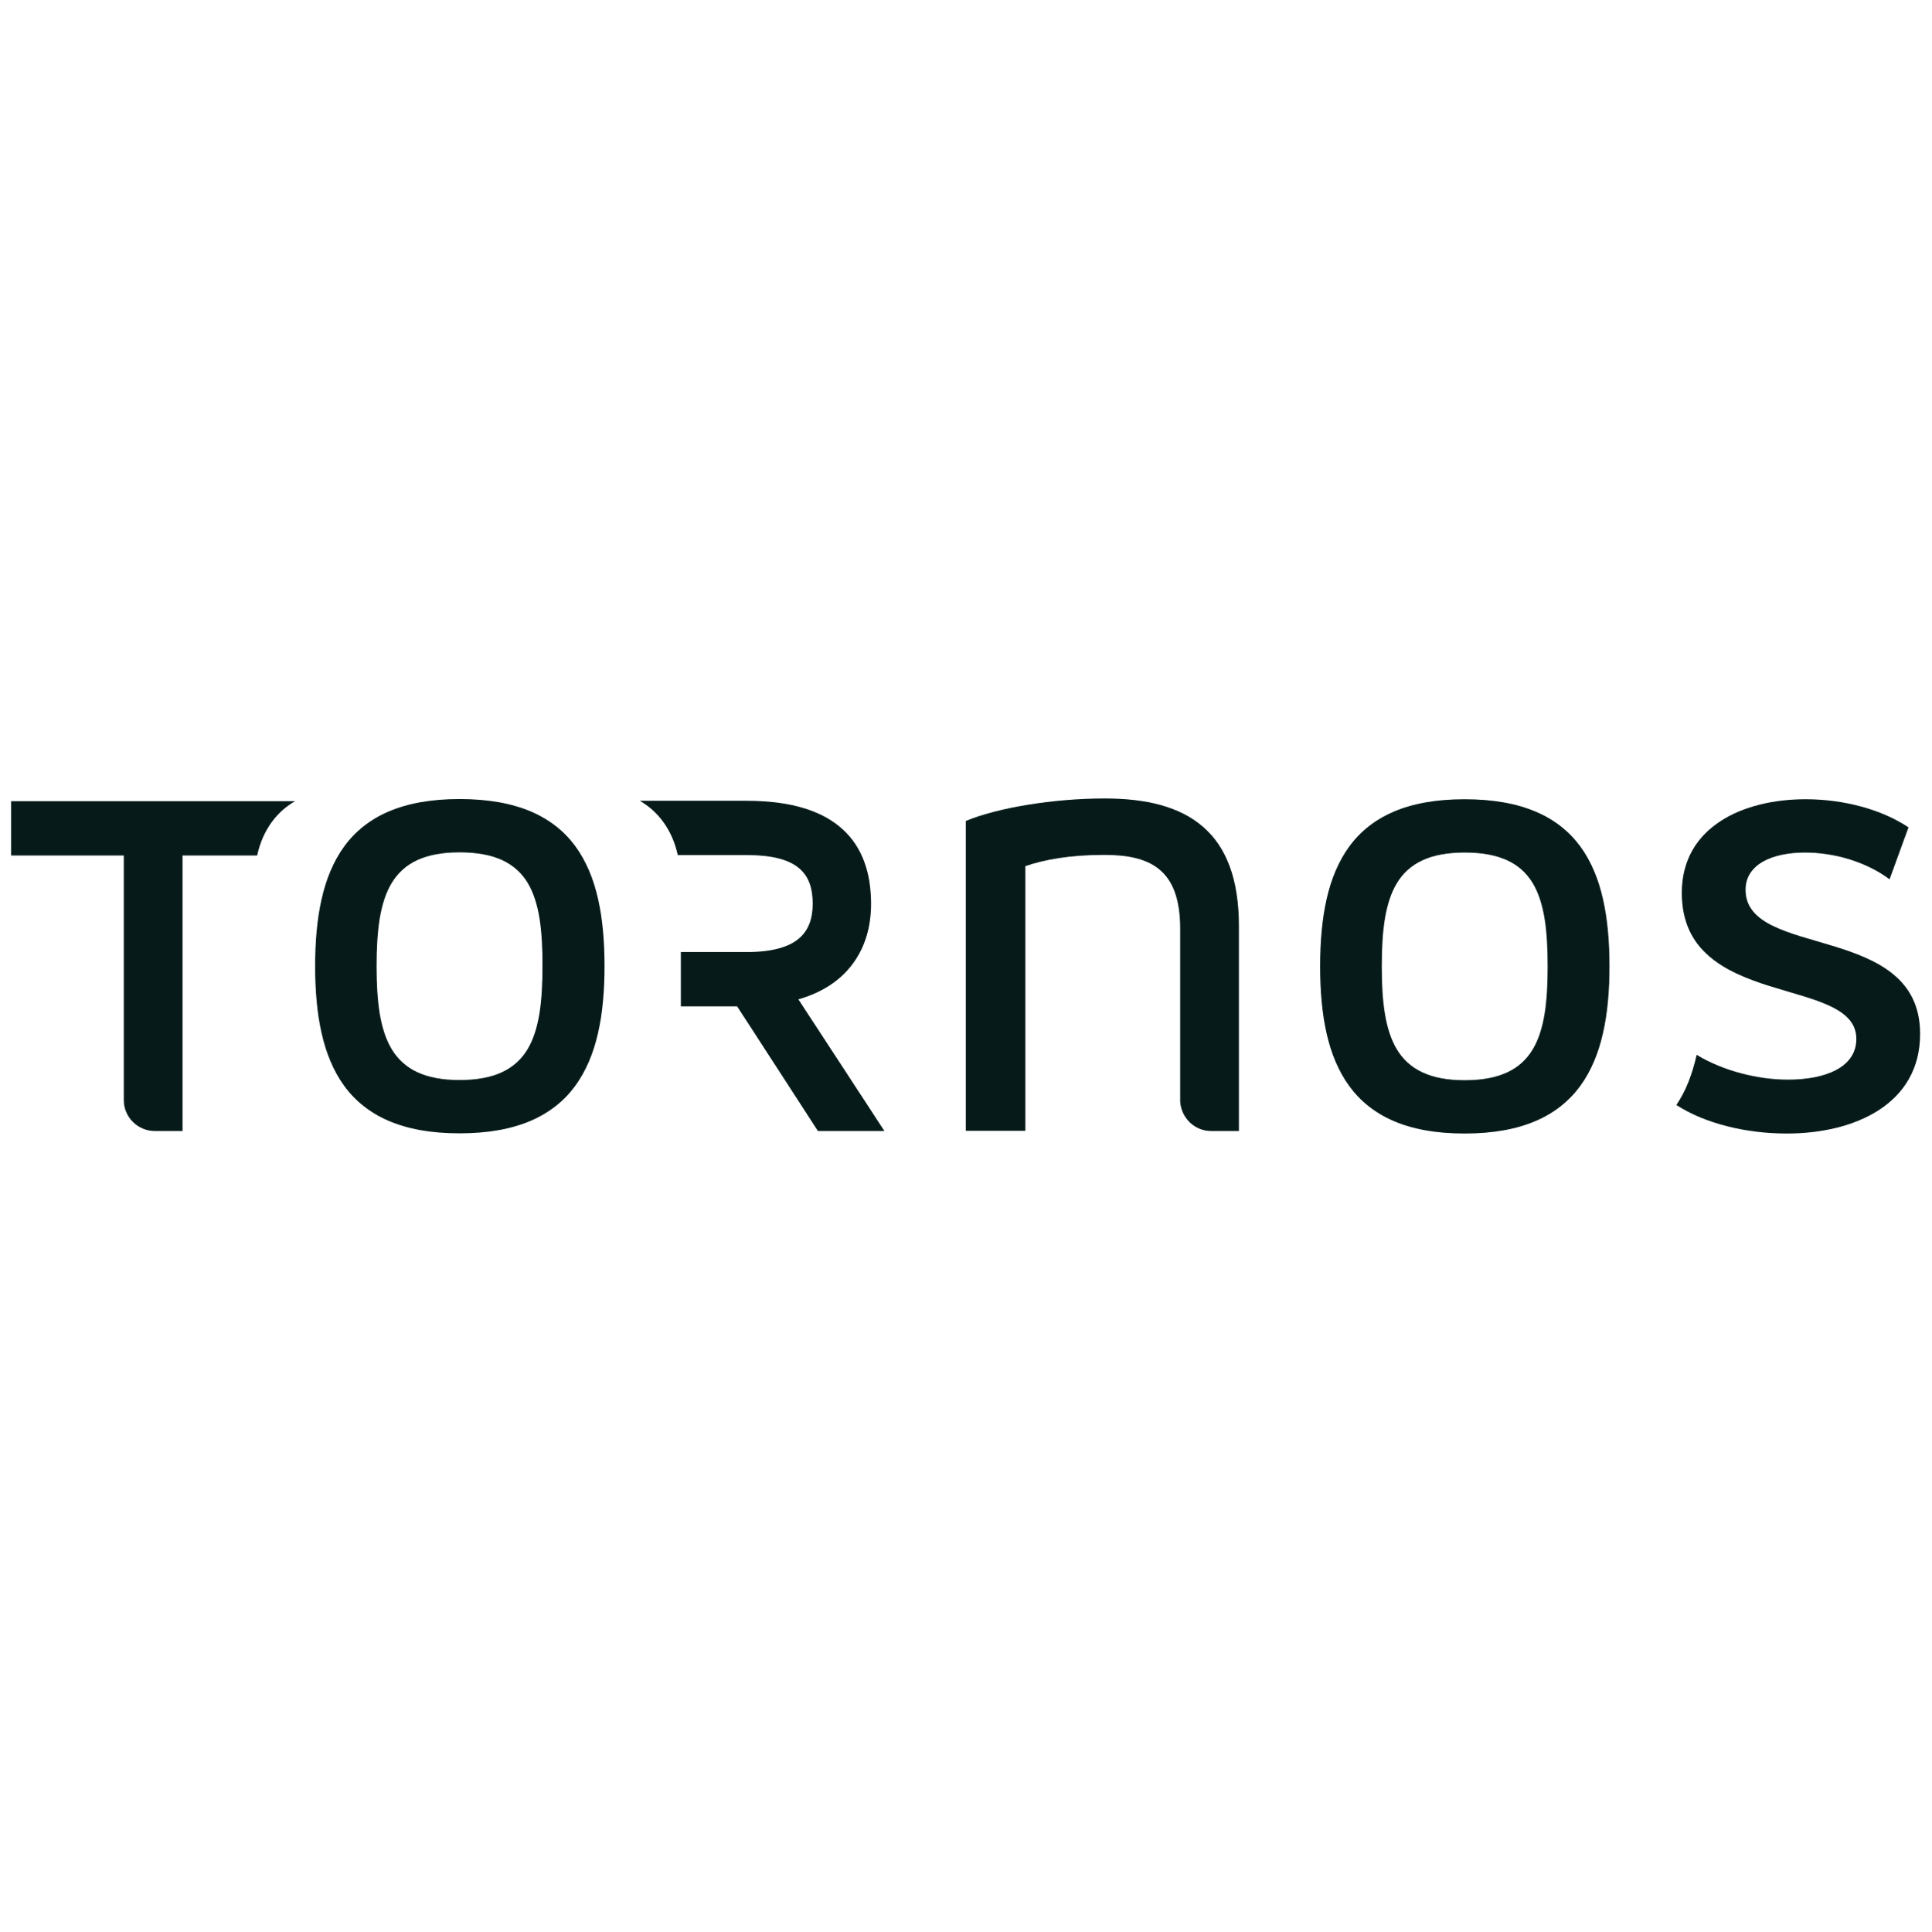 Tornos Bildmarke Logo  Transparent Gallery